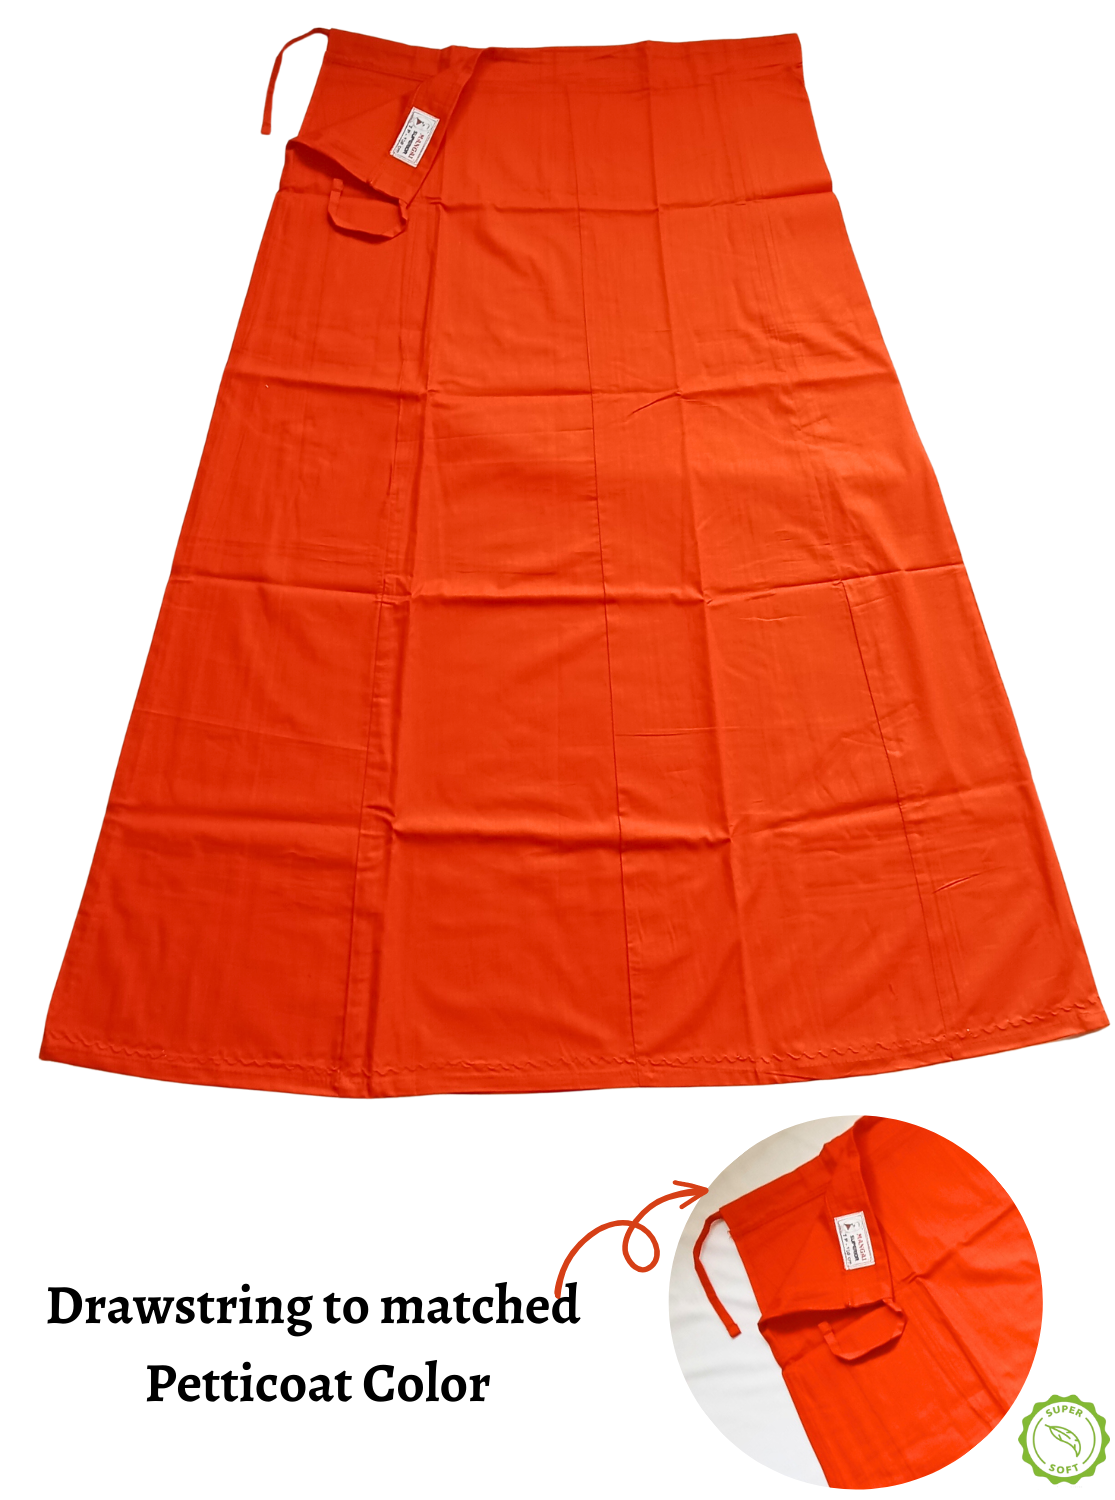 MANGAI Premium Elegant Cotton Petticoats - 8 Part | Premium Branded Women's Cotton Embroidery Petticoats